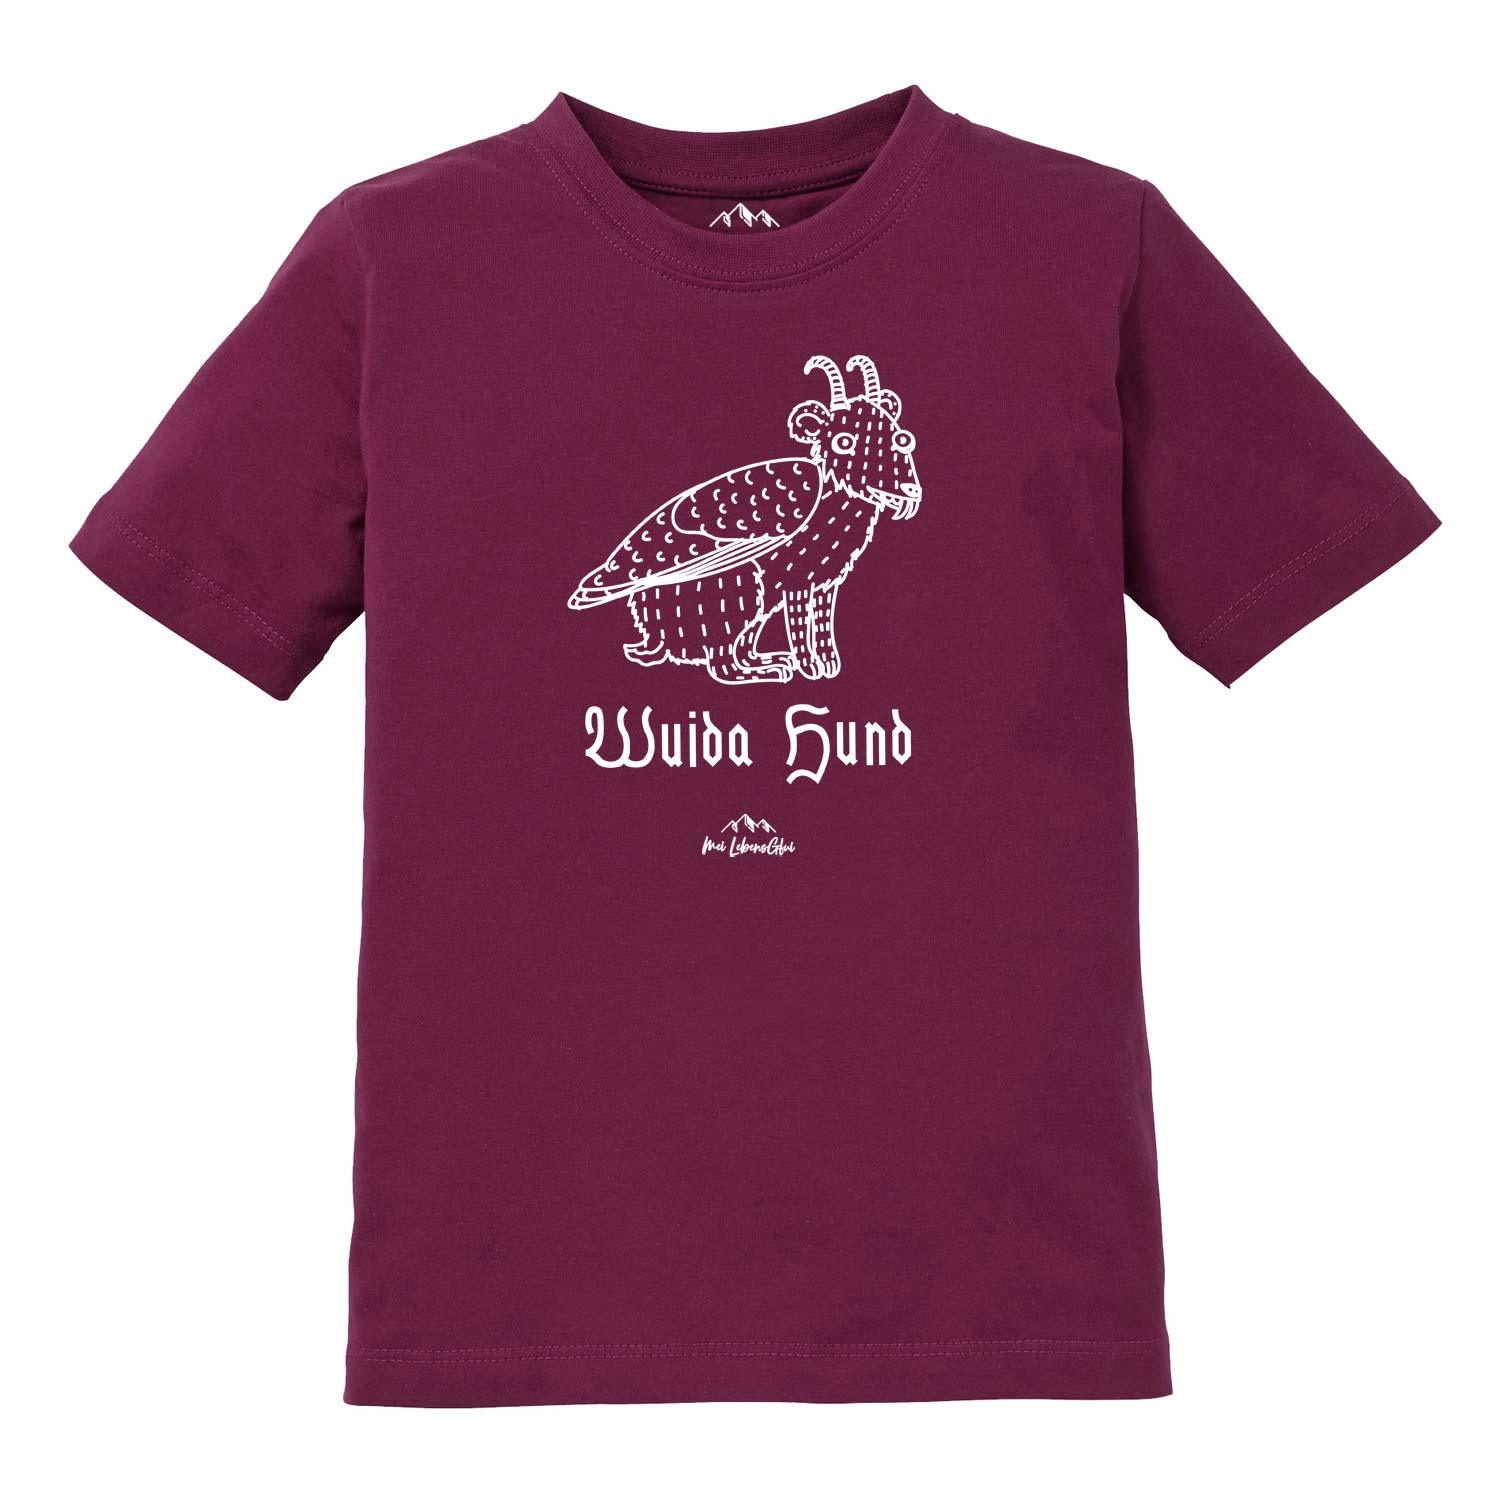 Kinder T-Shirt Wolpertinger "Wuida Hund" - bavariashop - mei LebensGfui